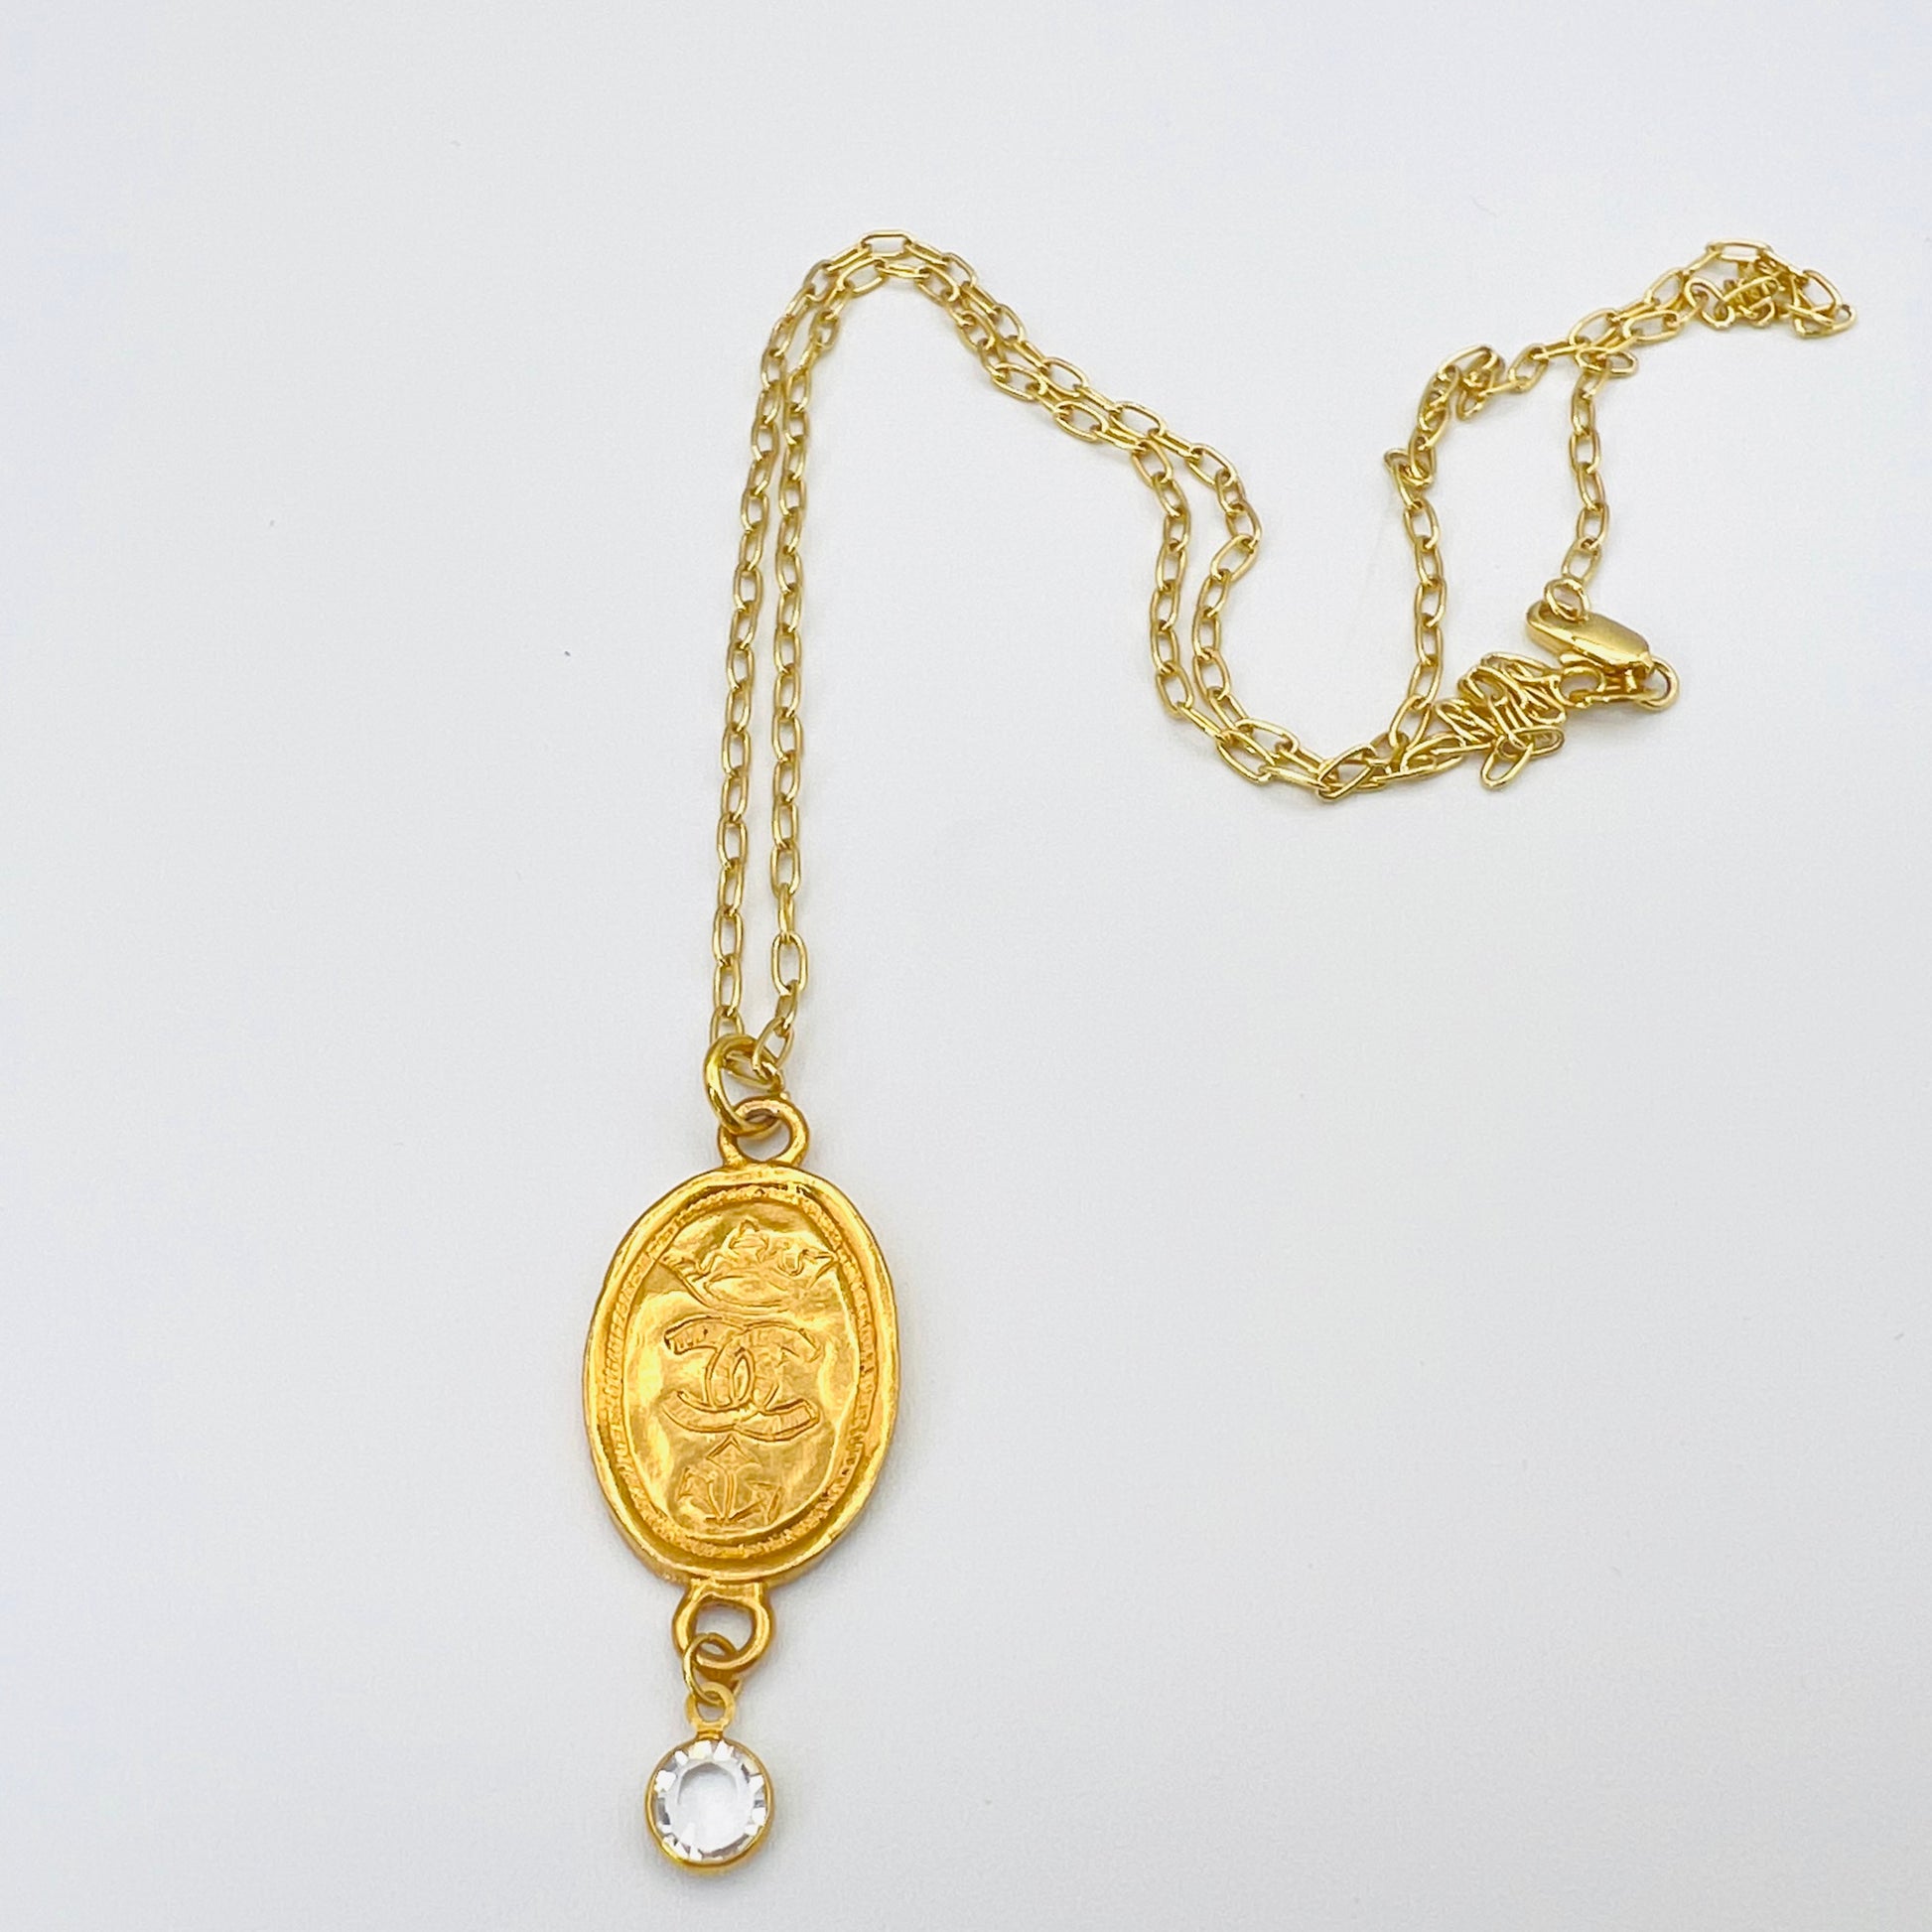 Repurposed Authentic Designer Zipper Pull Gold Plated Necklace